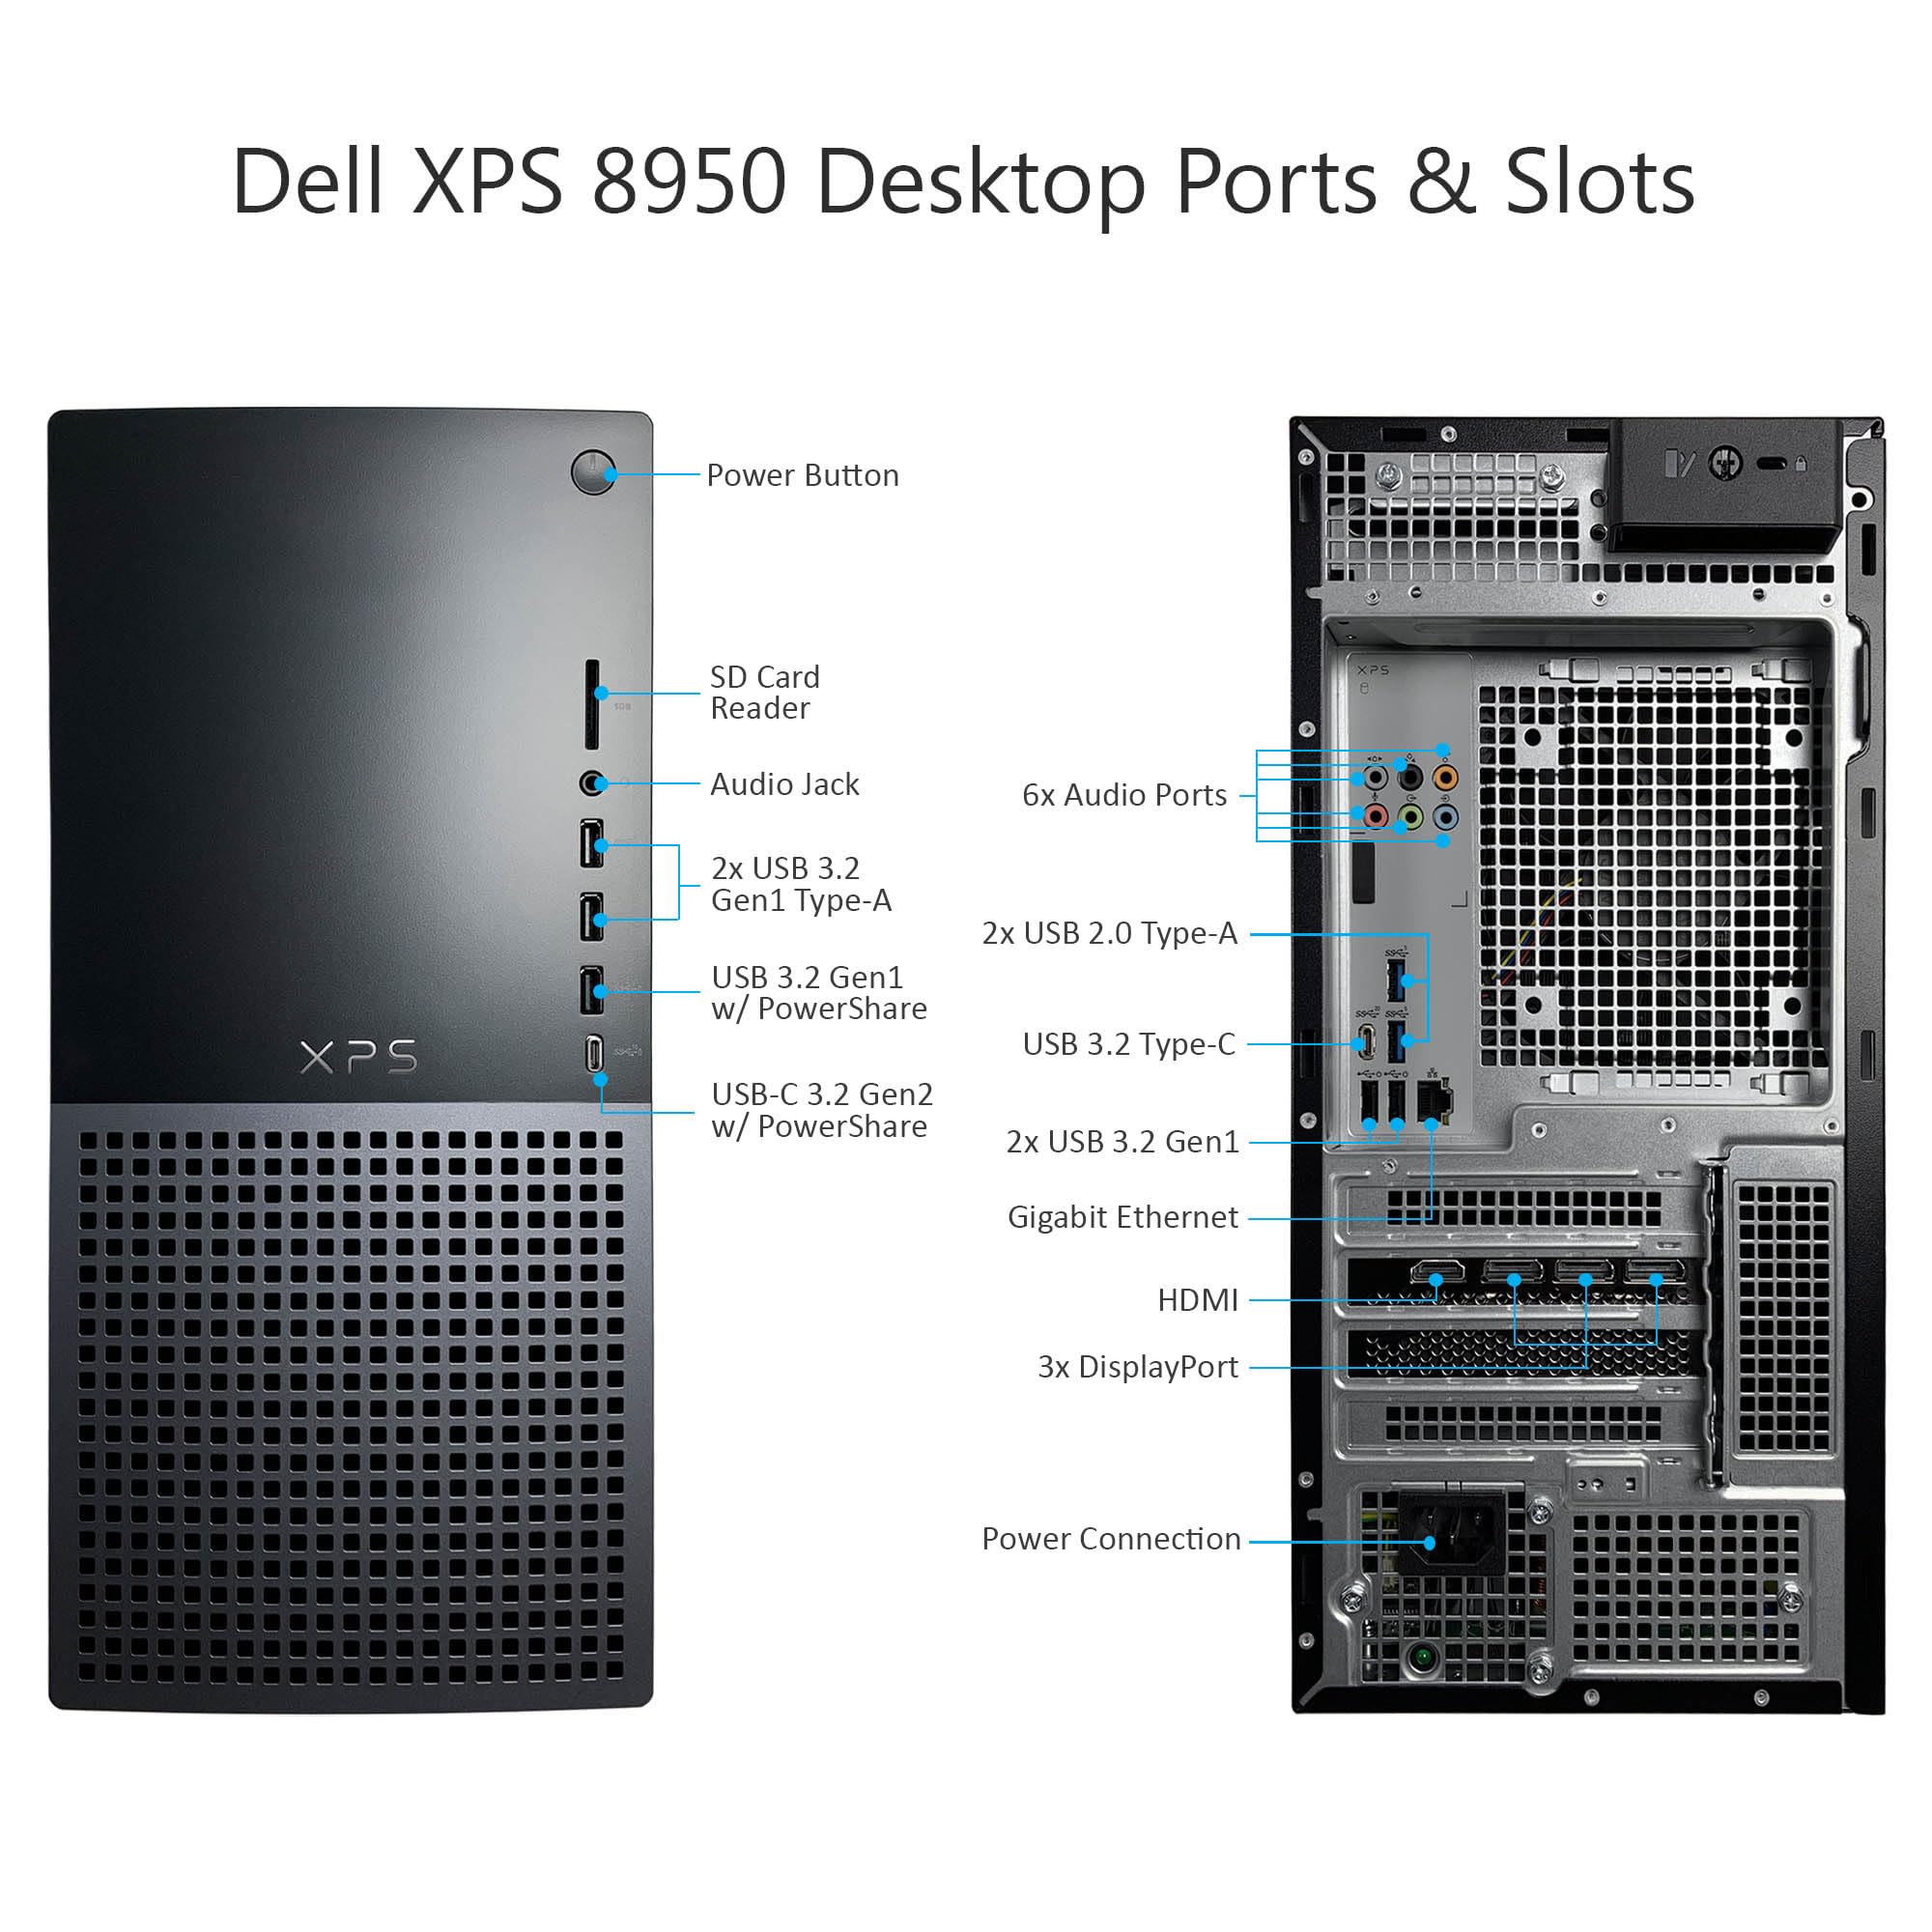 Dell XPS 8950 Gaming Desktop Computer - 12th Gen Intel Core i7-12700 up to 4.90 GHz CPU, 64GB DDR5 RAM, 4TB NVMe SSD + 10TB HDD, AMD Radeon RX 6700XT 12GB, Killer Wi-Fi 6, Windows 11 Pro